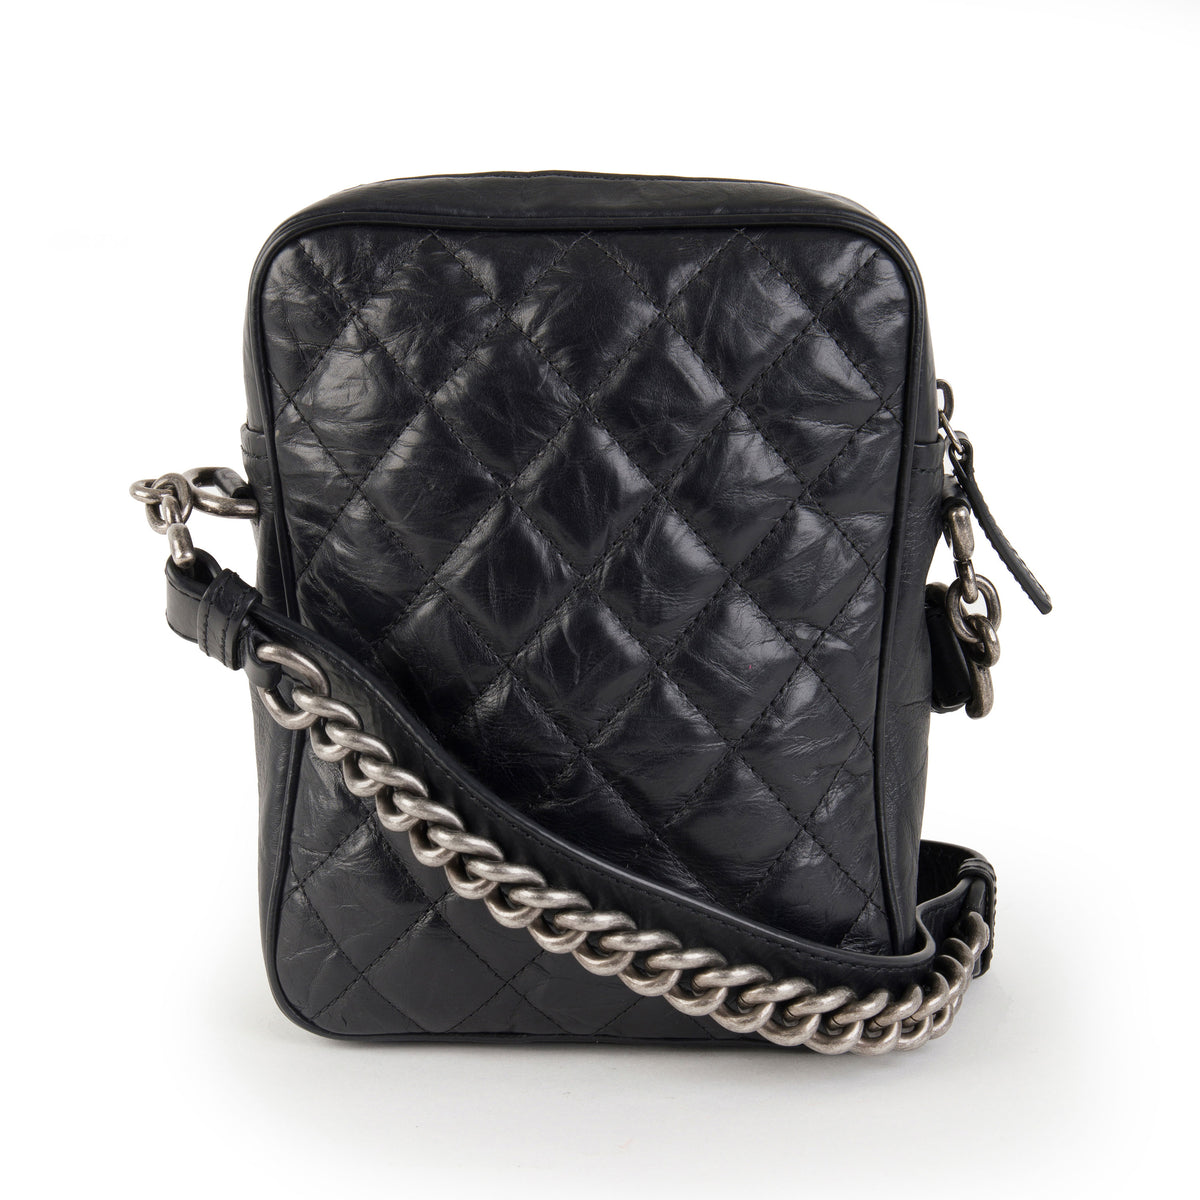 Chanel Small Wavy Caviar Hobo w/Tags - Blue Shoulder Bags, Handbags -  CHA910487